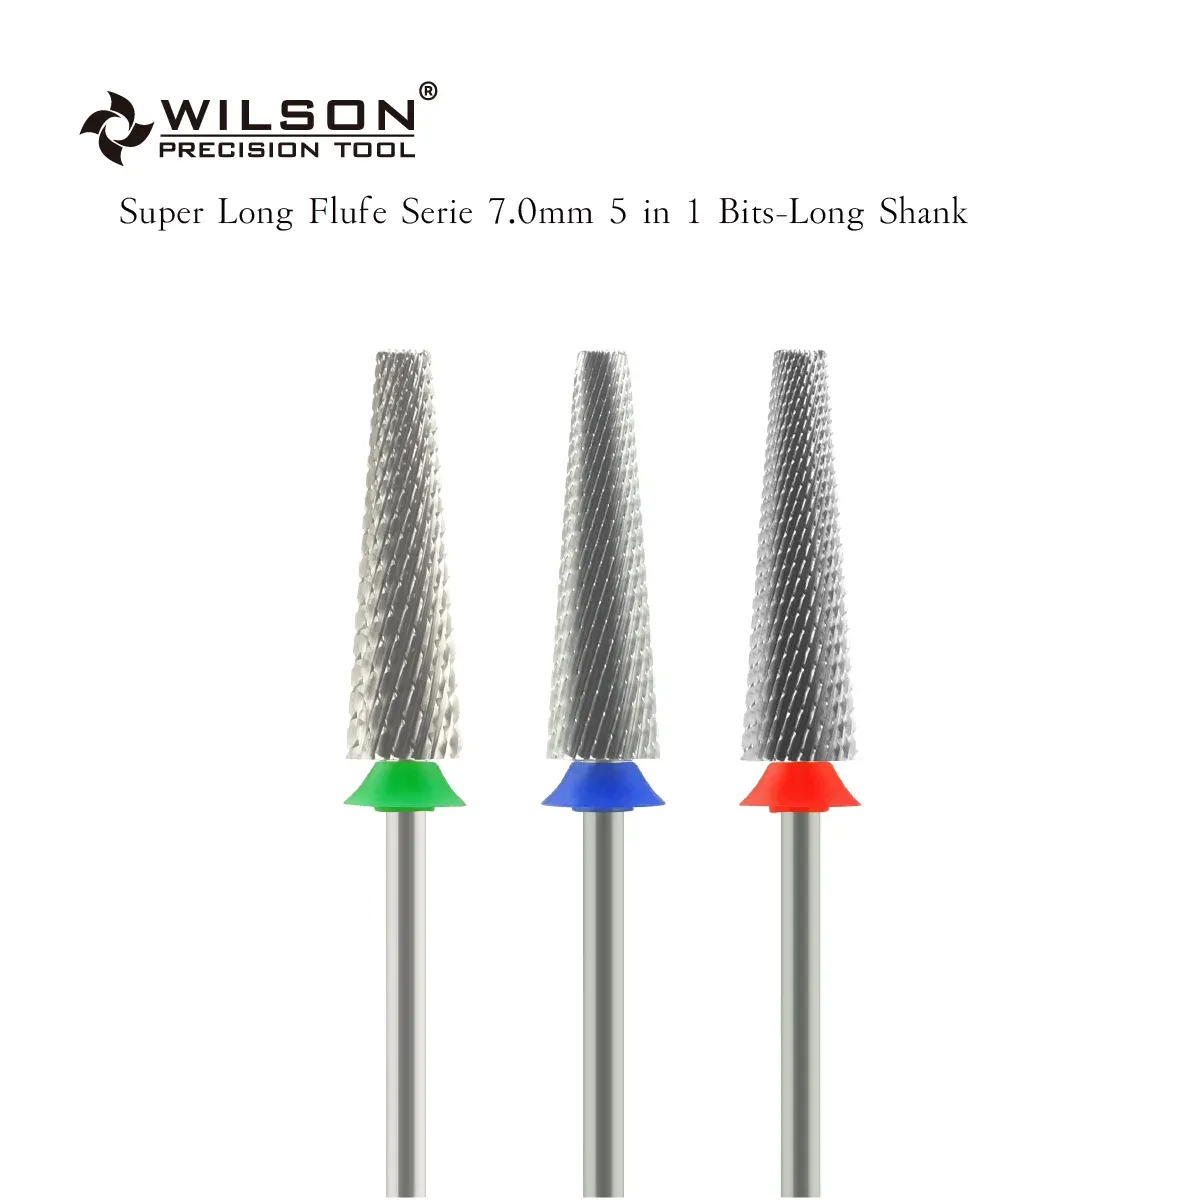 Биты Wilson Super Long Flufe Serie 7,0 мм 5 в 1 бит -шан -шан.